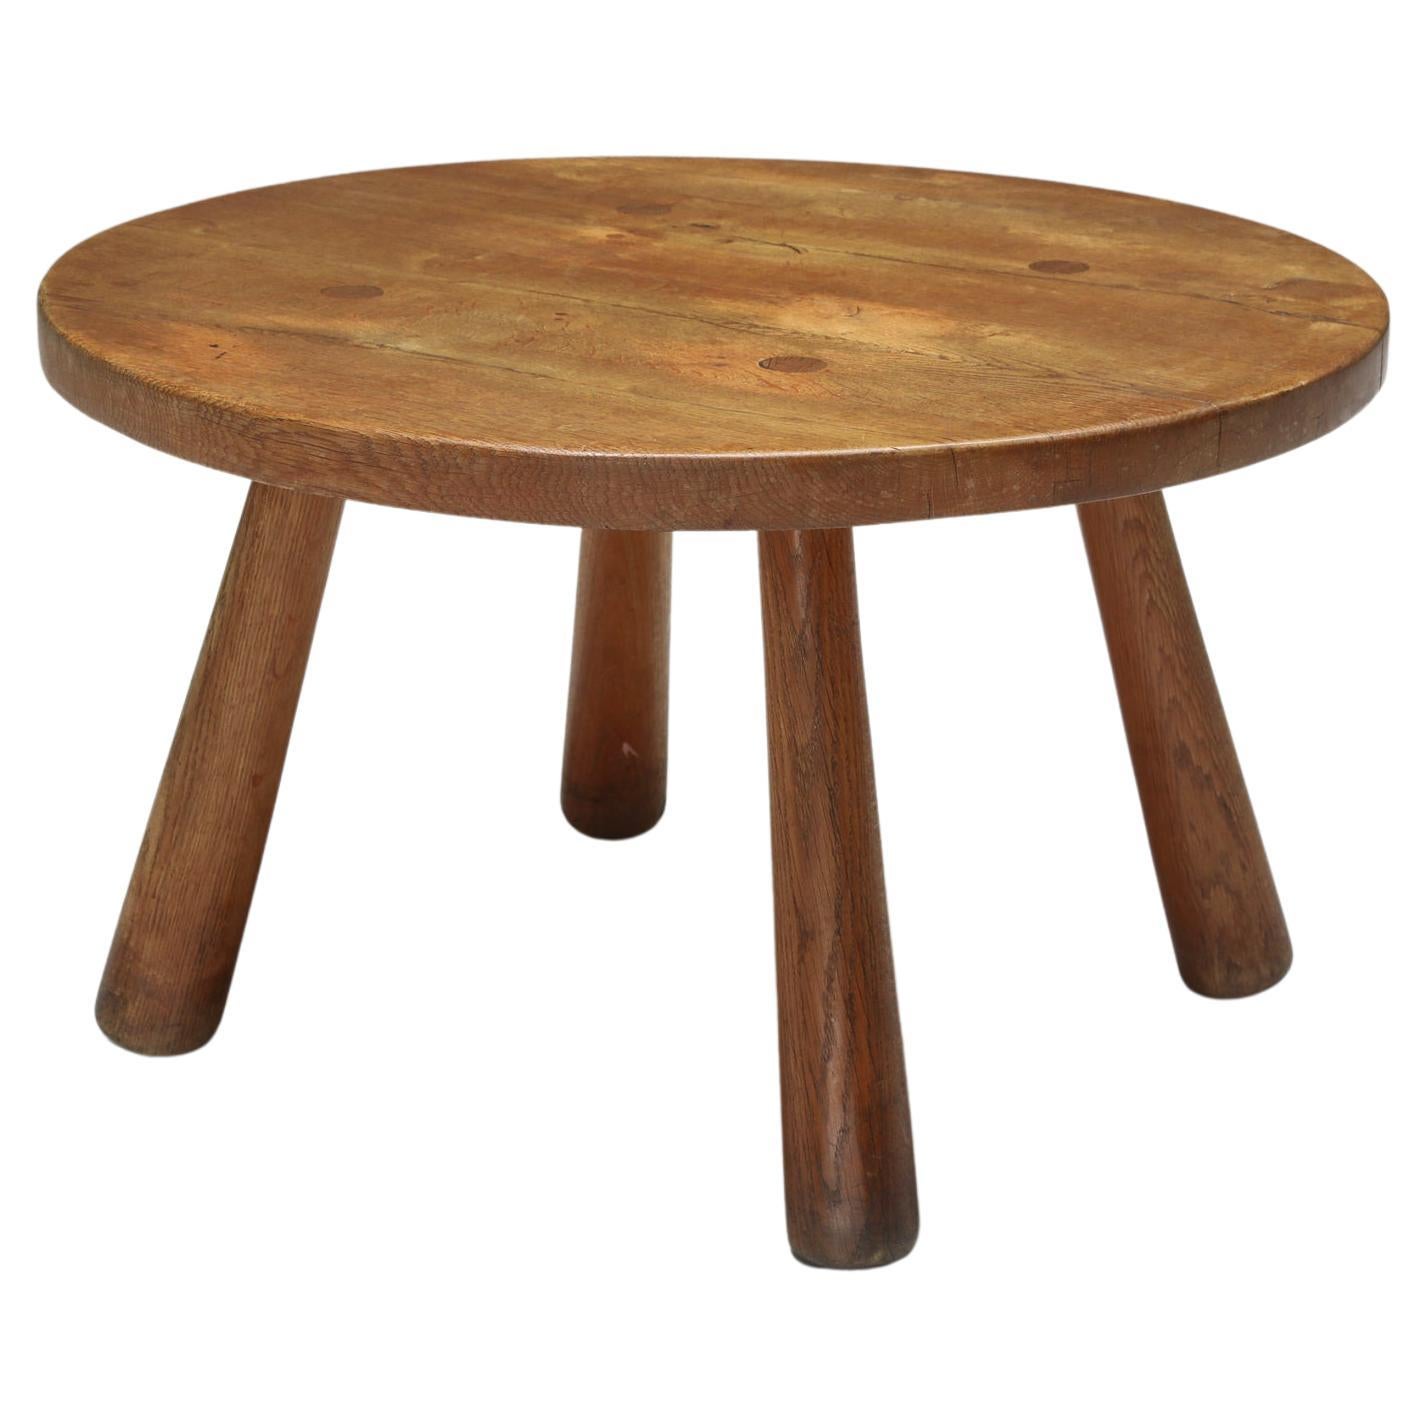 Rustic Round Coffee Table, Mid-Century Modern, Minimalist, 1950's